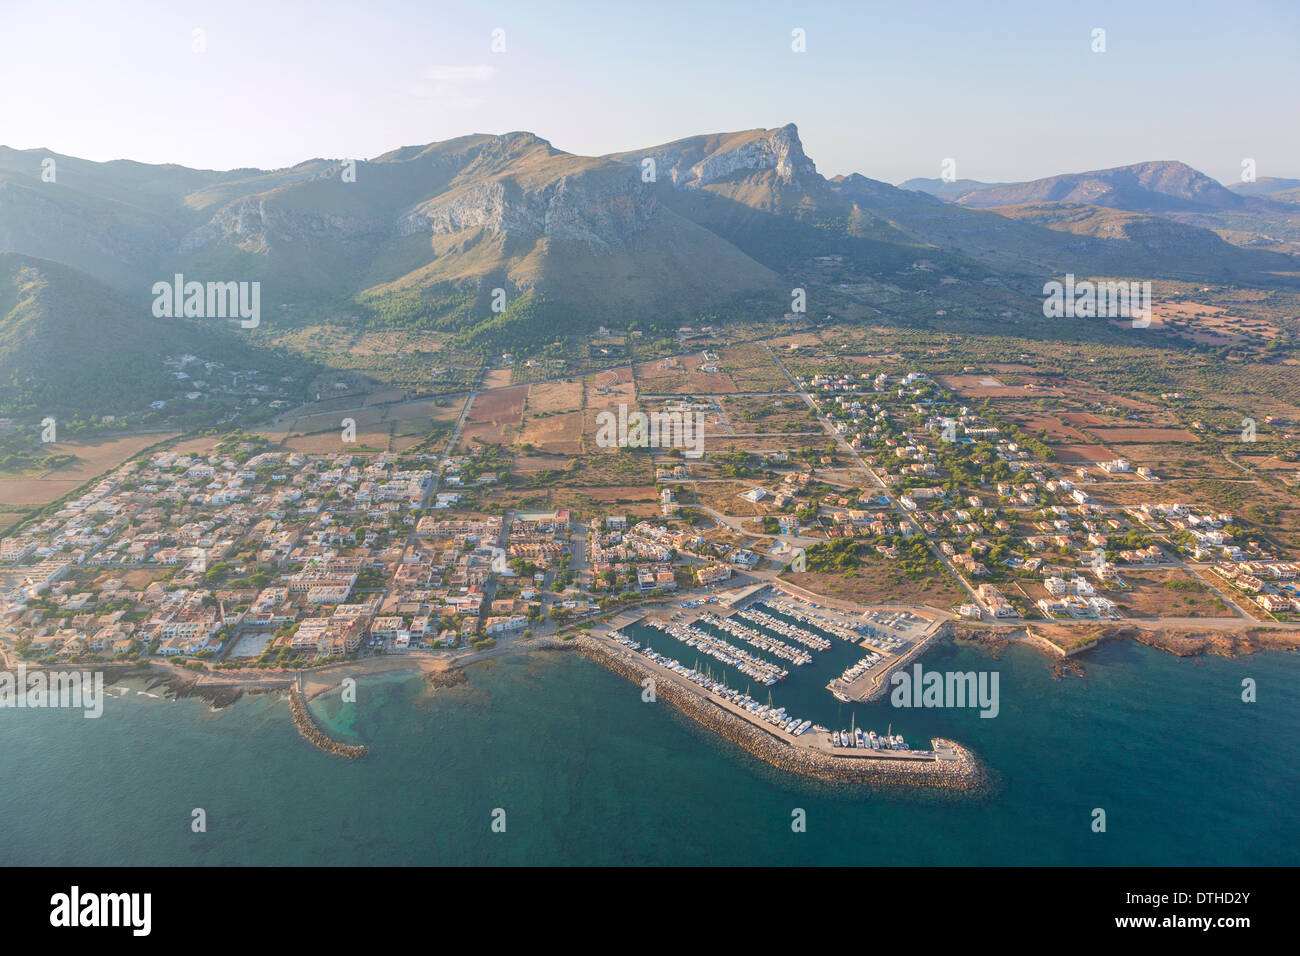 Colònia de Sant Pere resort and Bec de Farrutx mountain. Artà area. Aerial view. Majorca, Balearic islands, Spain Stock Photo